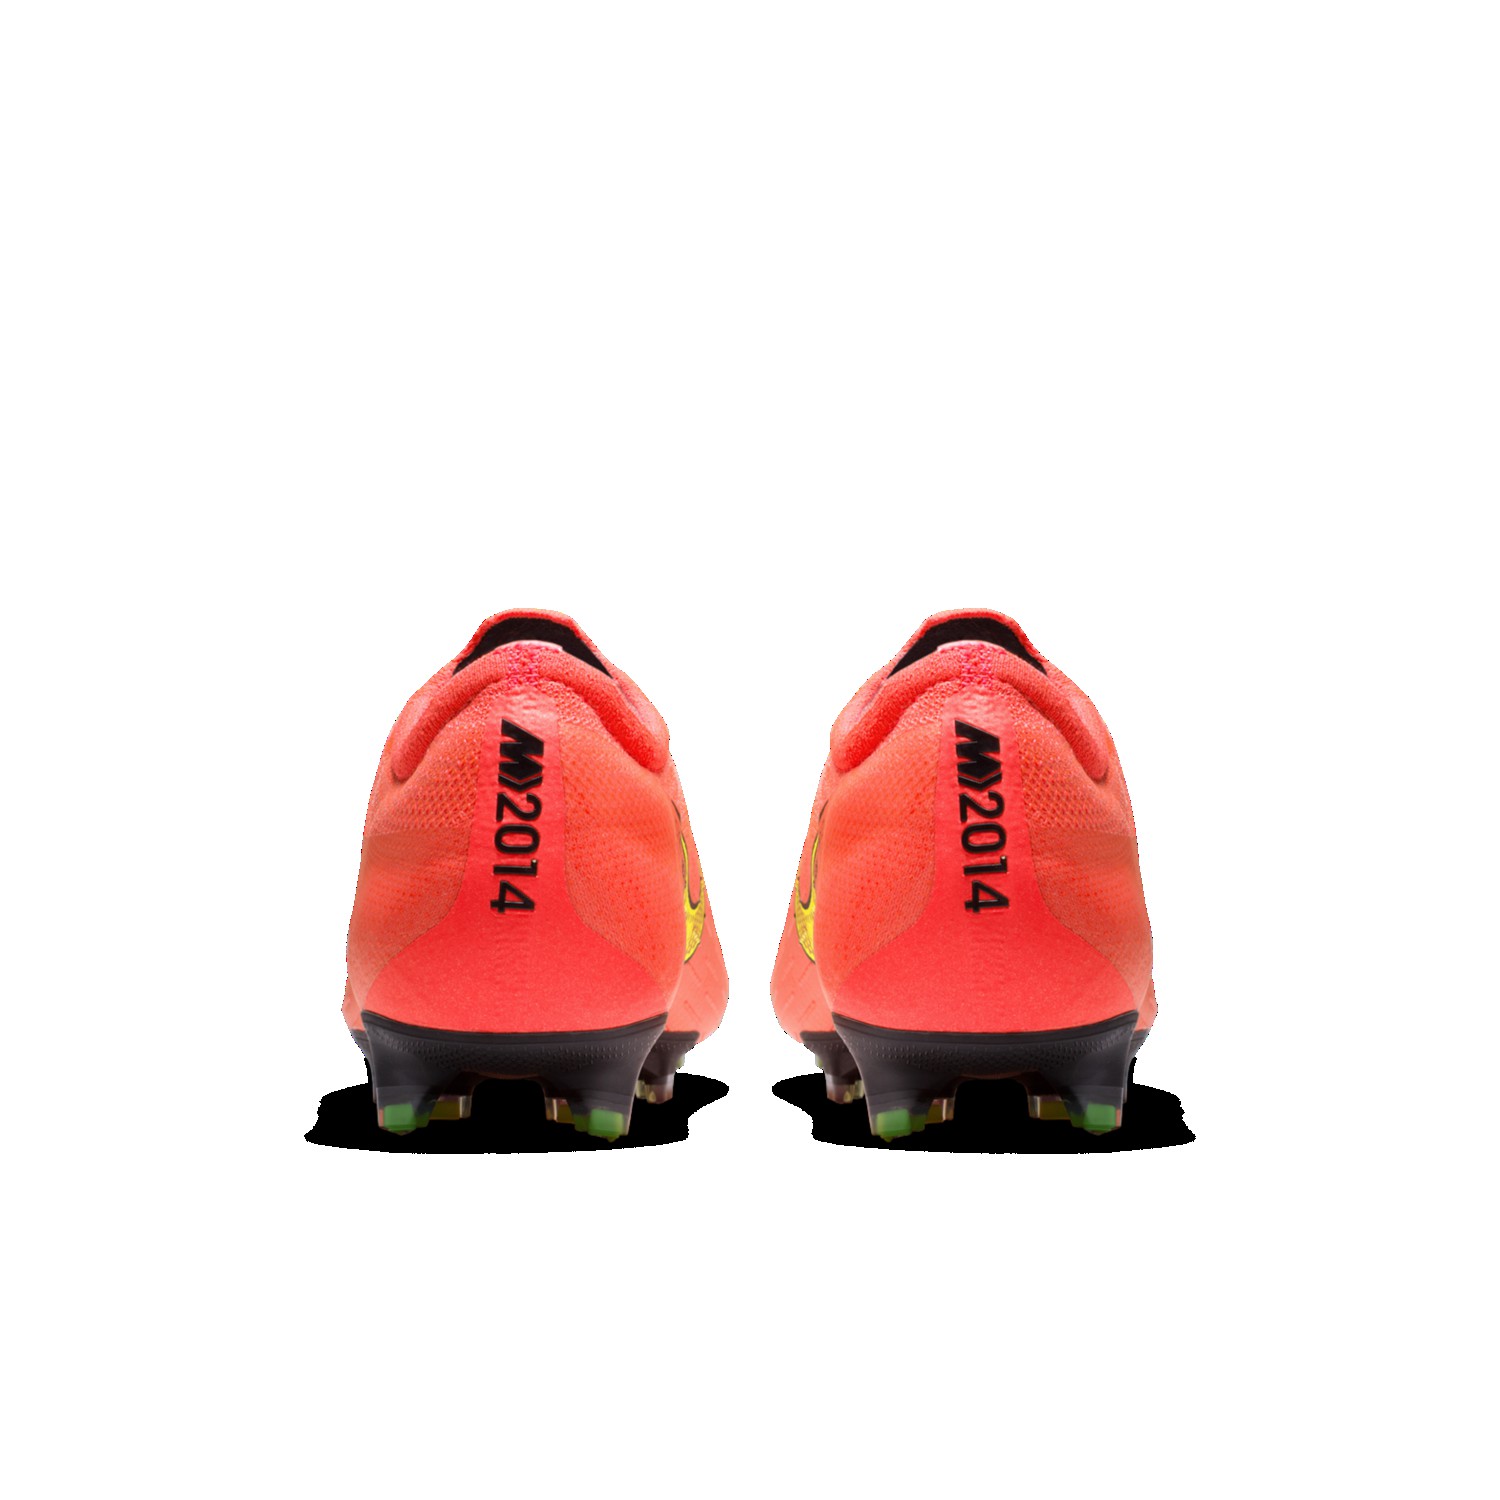 Nike Men's Mercurial vapor X SG PRO Football Training